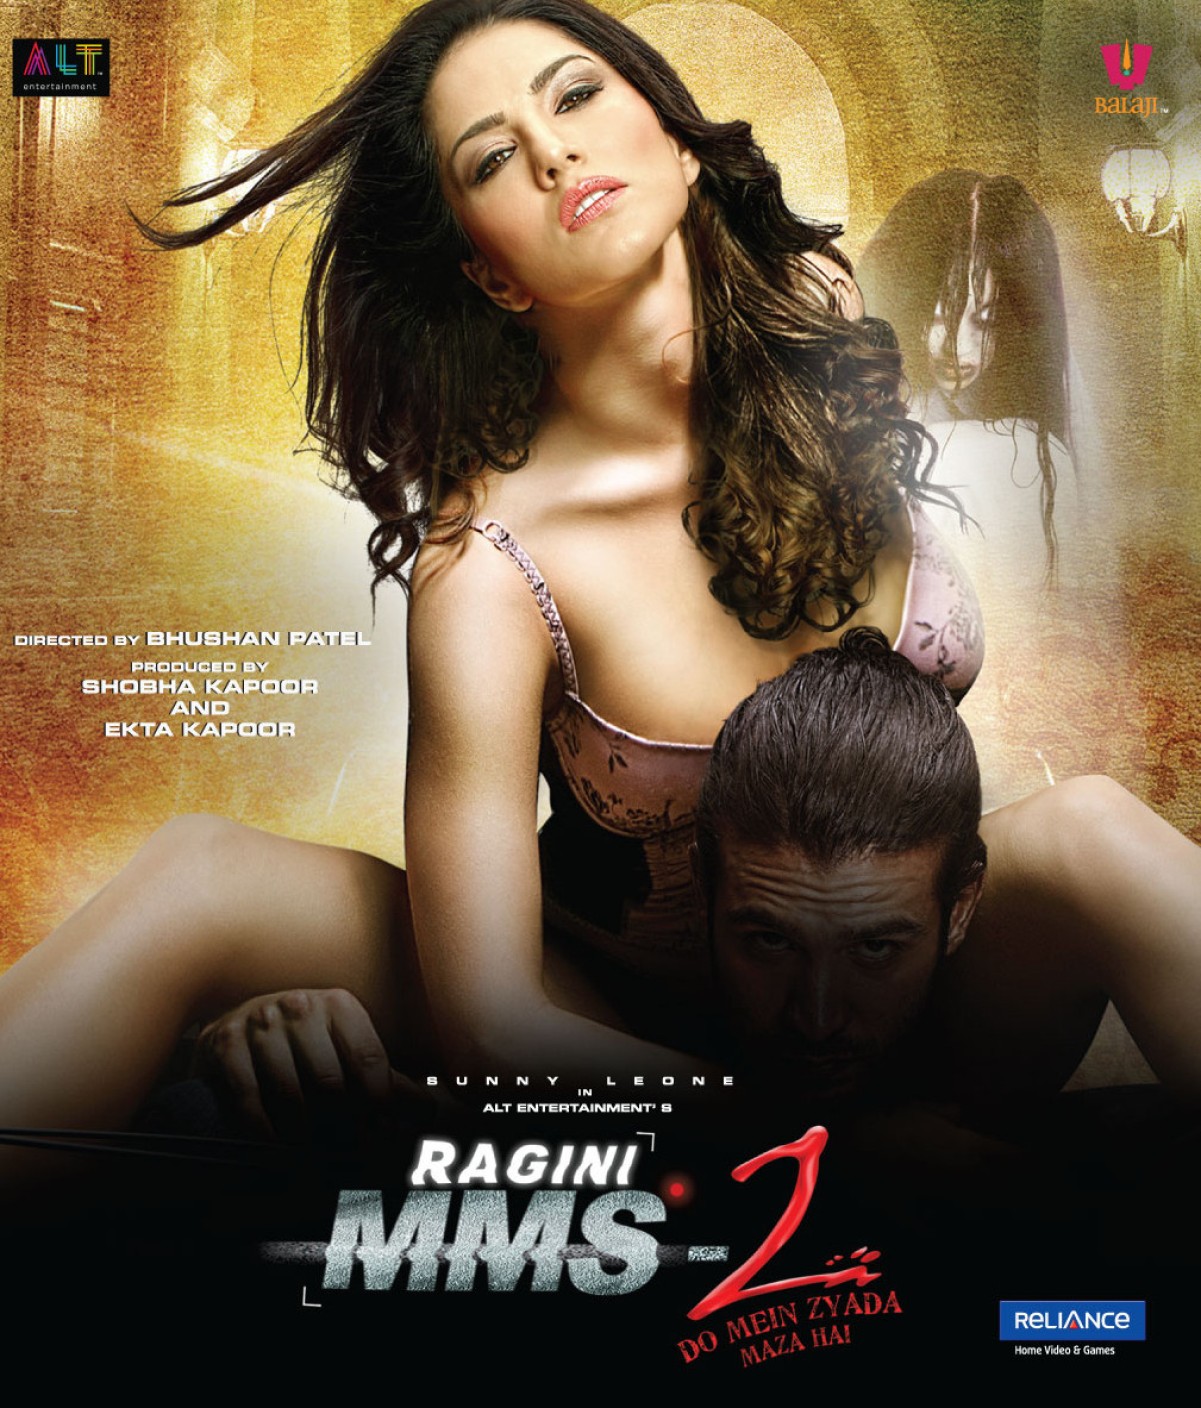 ragini mms returns movie download